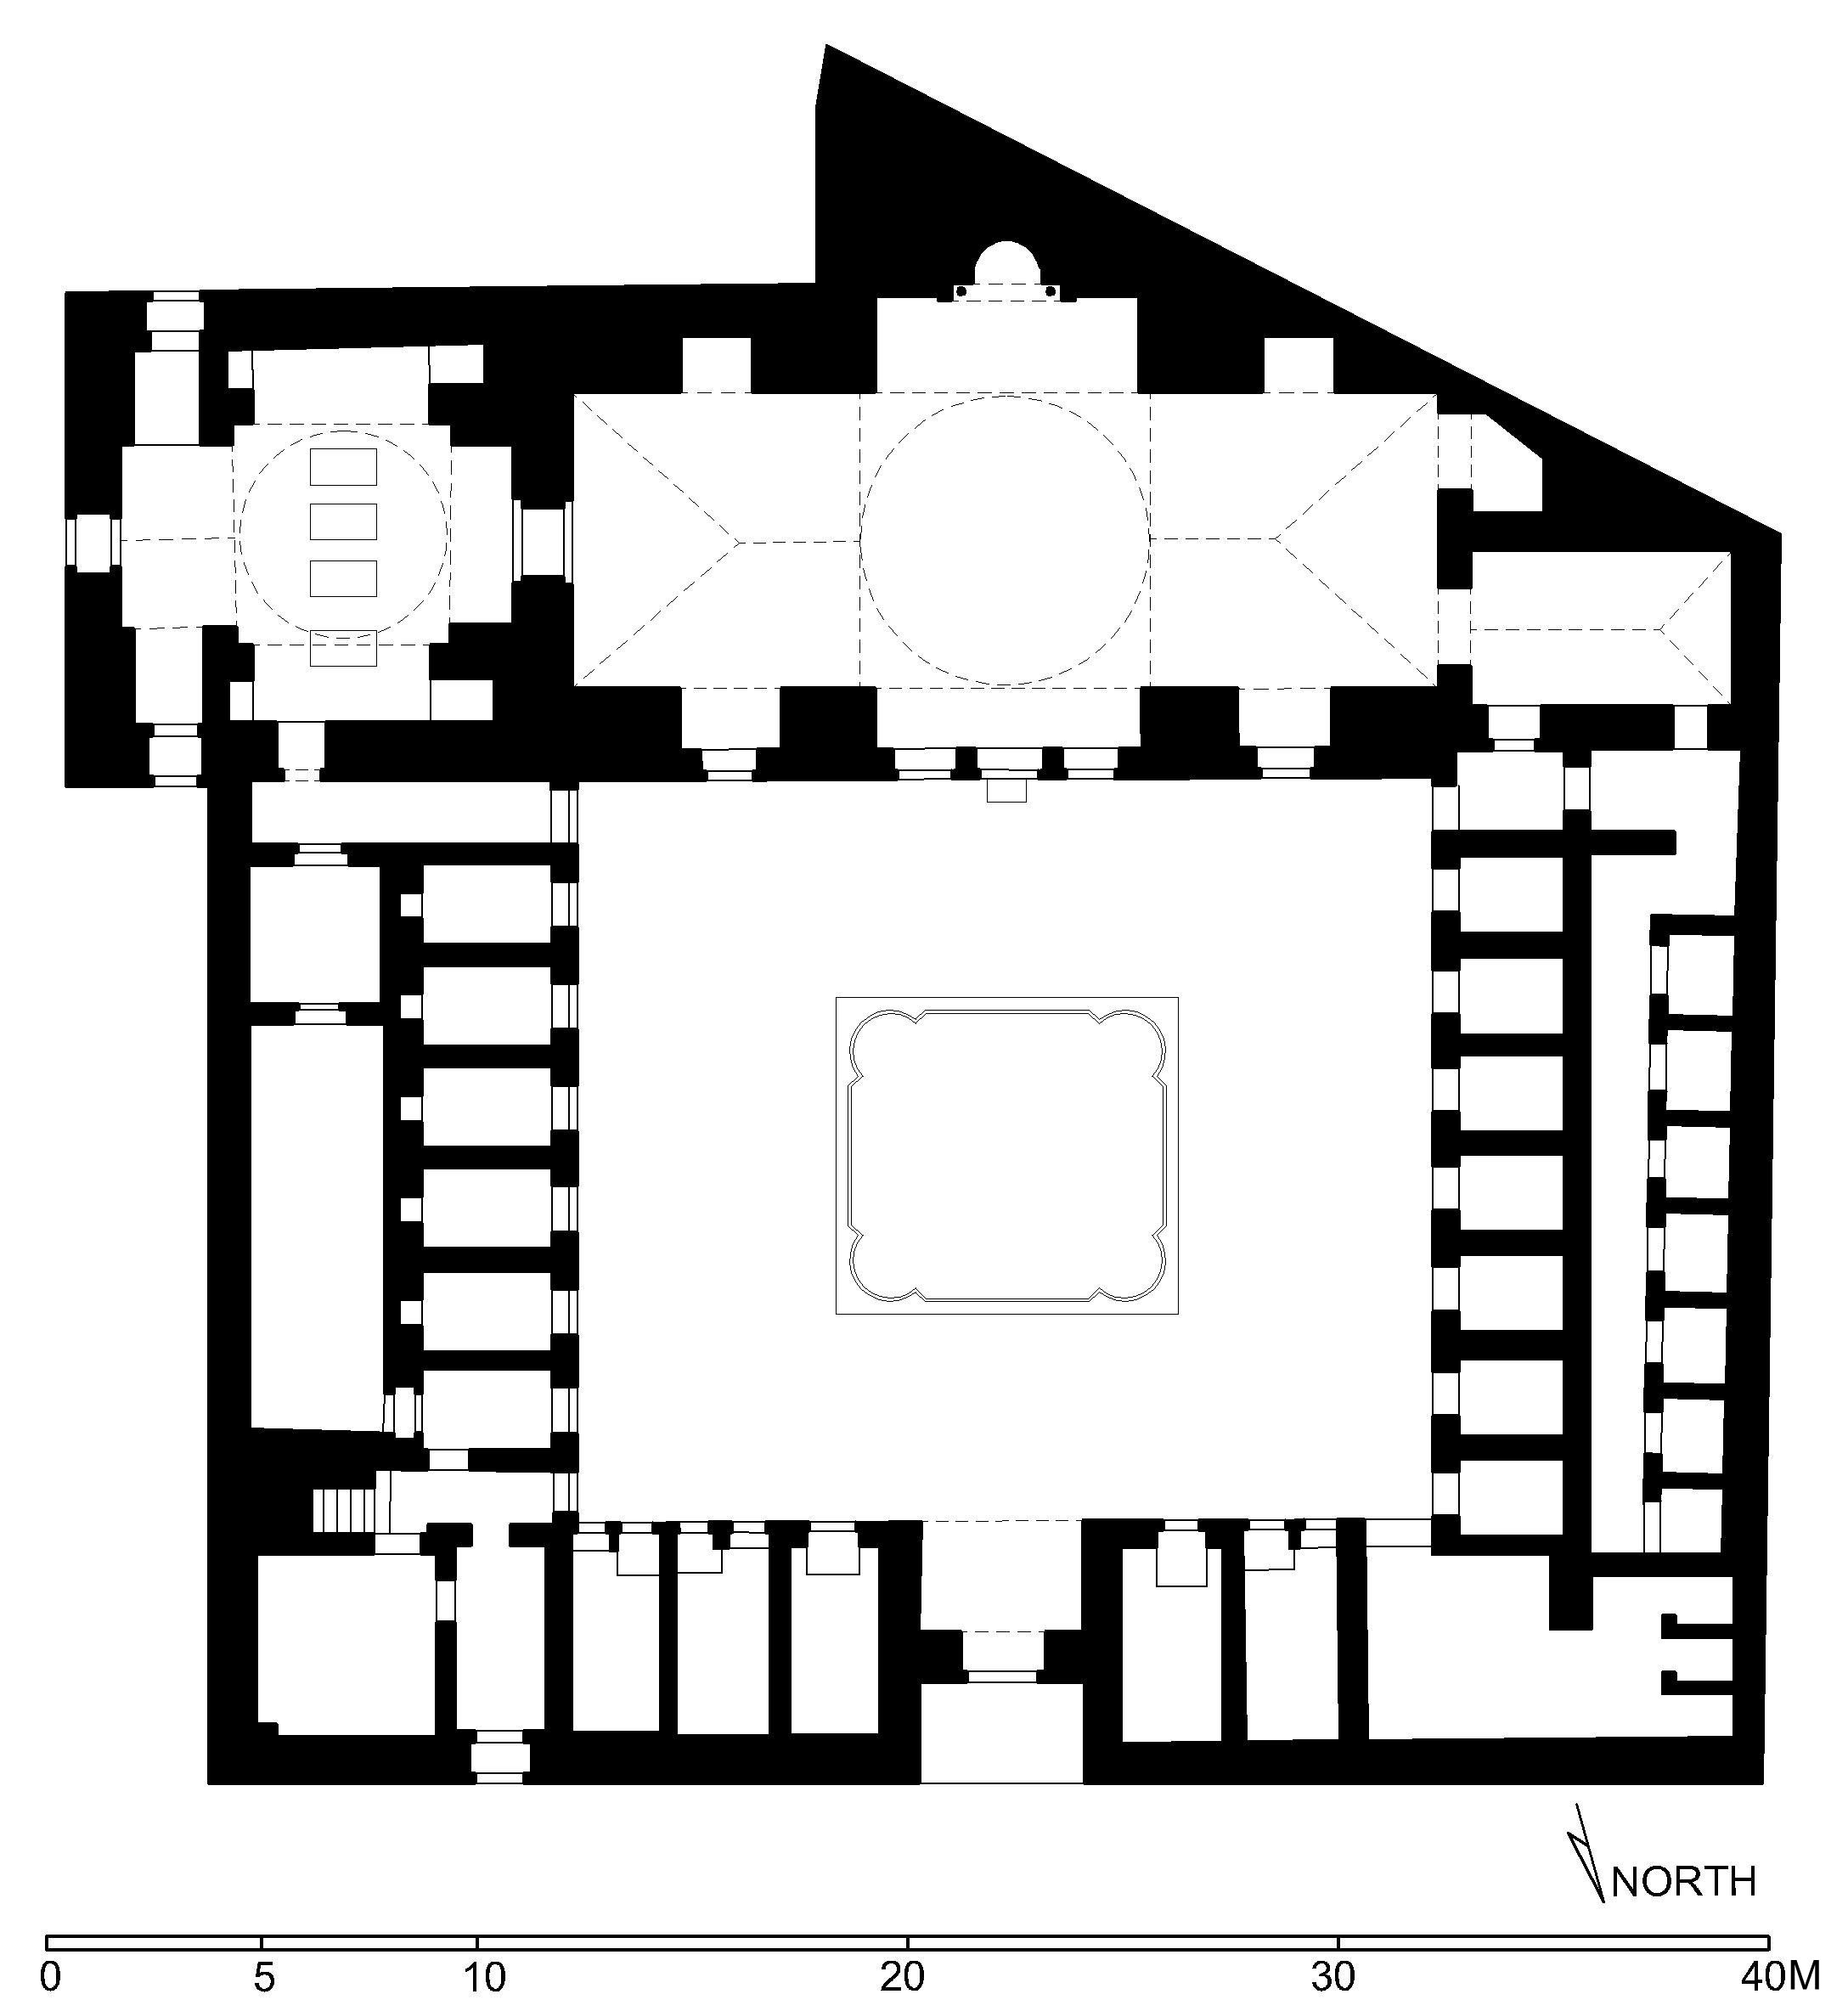 Madrasa al-Sultaniyya - Floor plan in AutoCAD 2000 format. Click the download button to download a zipped file containing the .dwg file. <div><br></div><div>Original source: Meinecke, Michael.&nbsp;<span style="font-style: italic;">Die Mamlukische Architektur in&nbsp;Ägypten und Syrien (648/1250 bis 923/1517)</span>. Vol. 1, p. 144, fig. 93. 2 Vols. Glückstadt: J. J. Augustin, 1992.&nbsp;</div>